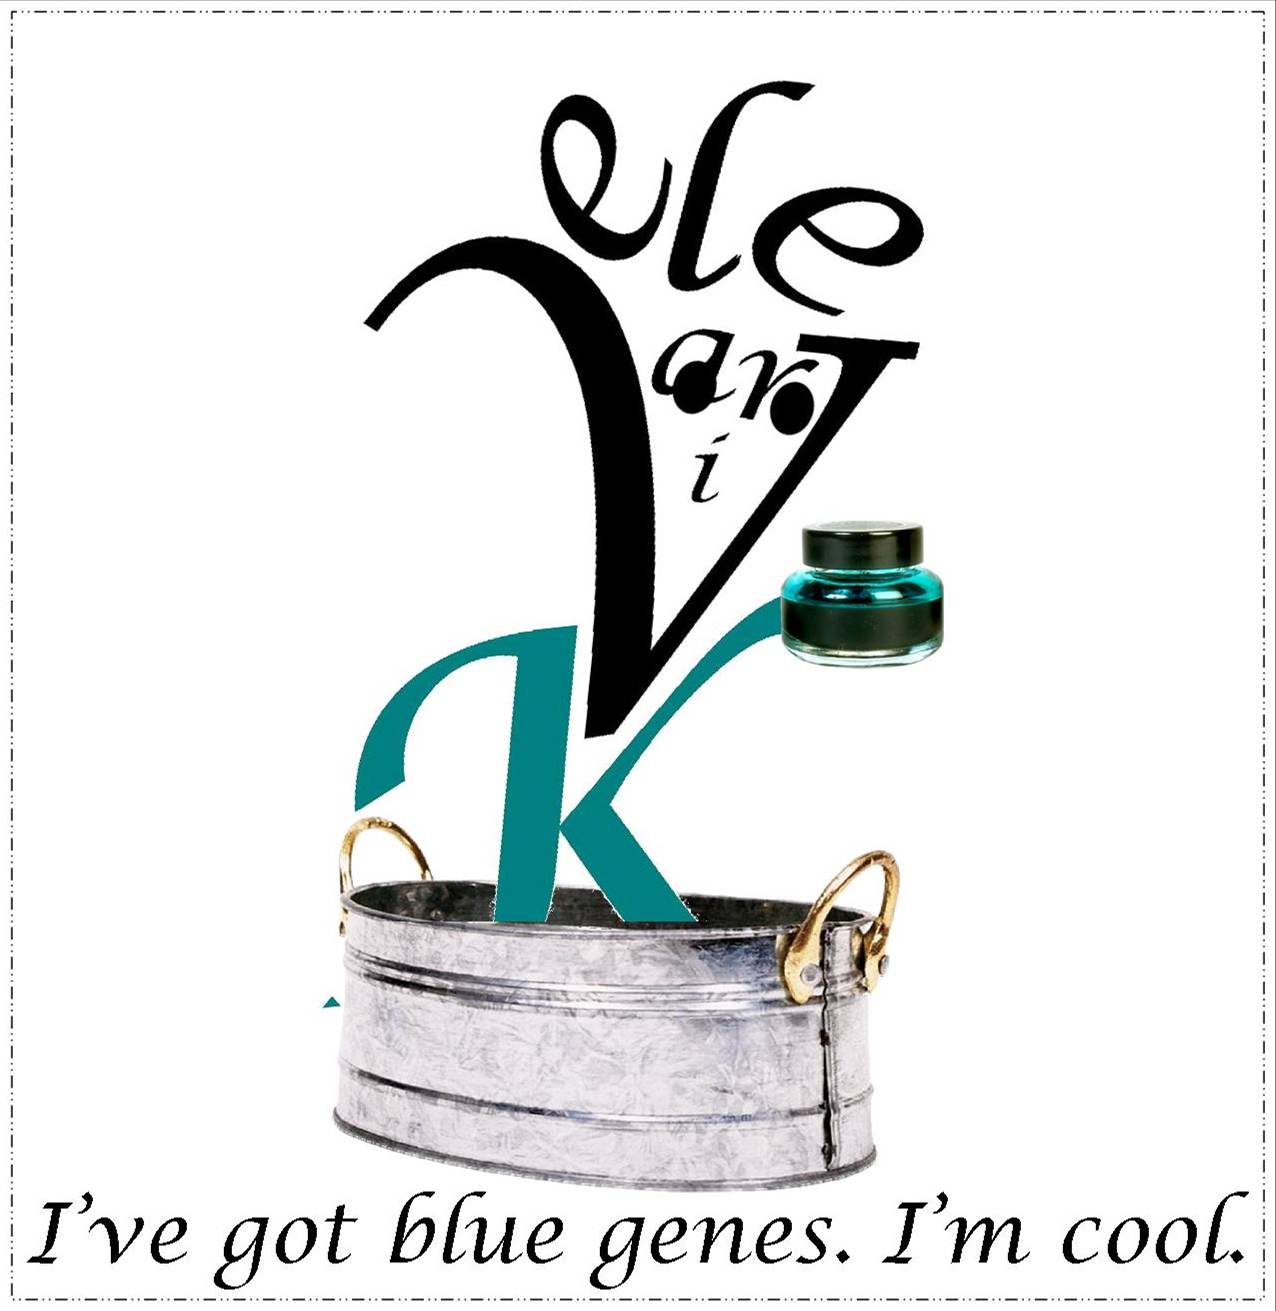 I've got blue genes I'm cool